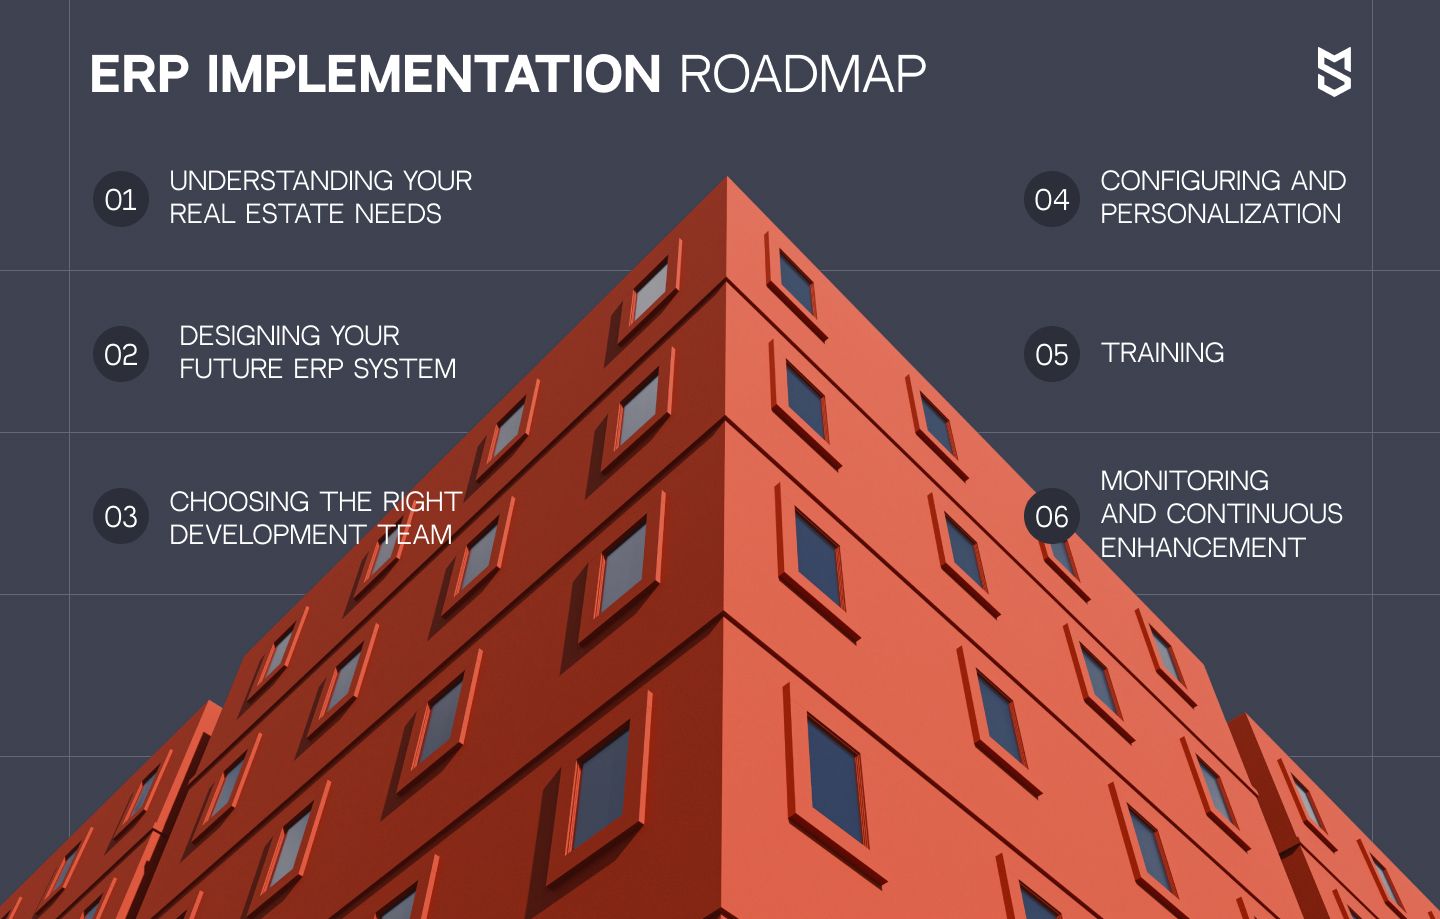 ERP implementation roadmap